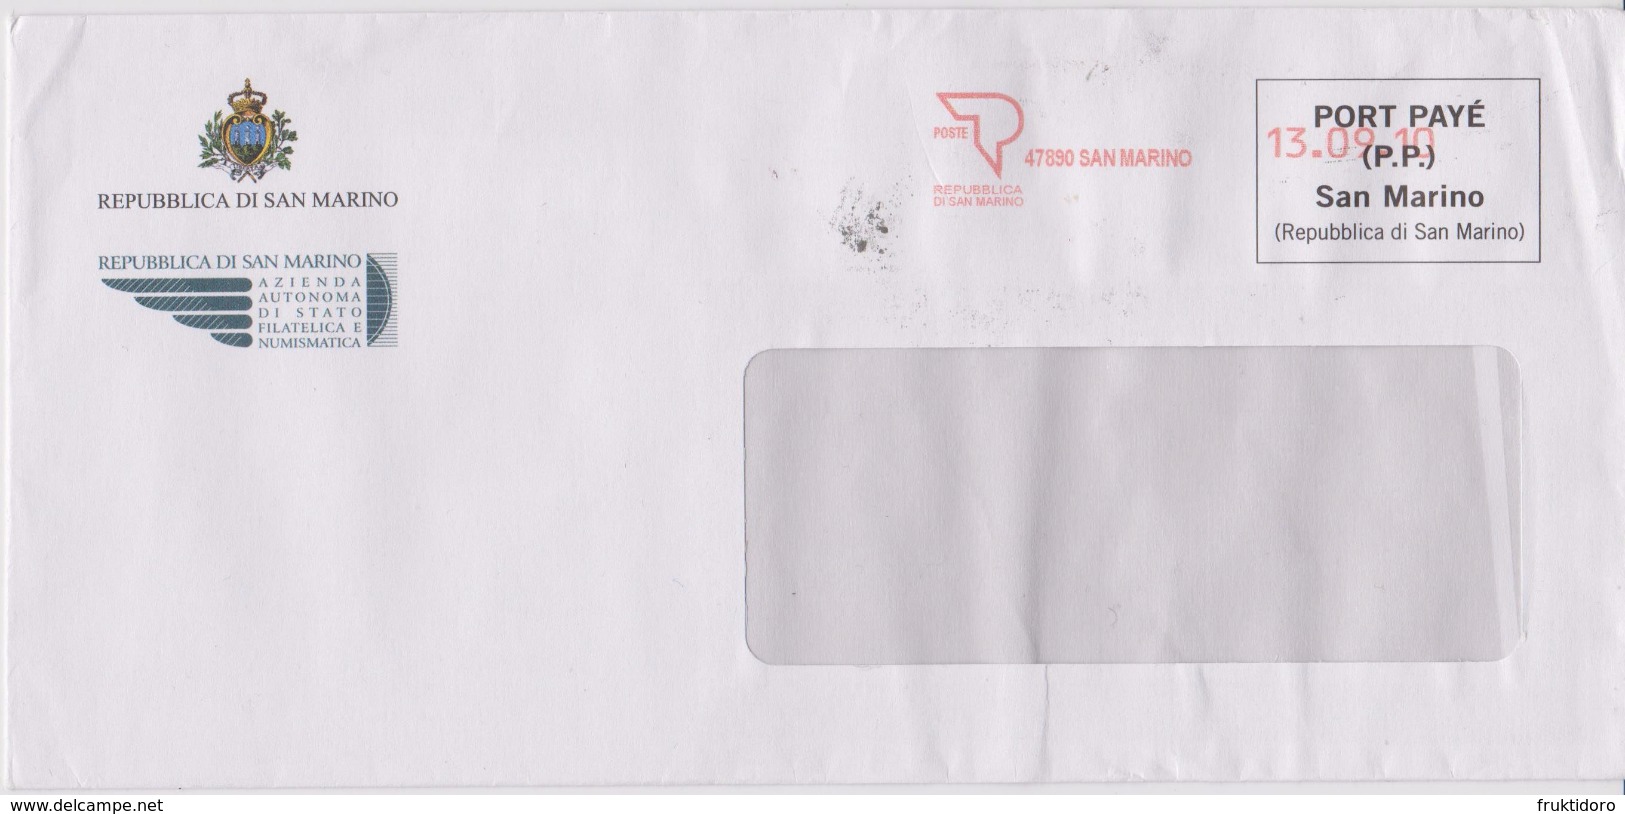 San Marino Envelopes Port Payé Circulated - Errors, Freaks & Oddities (EFO)